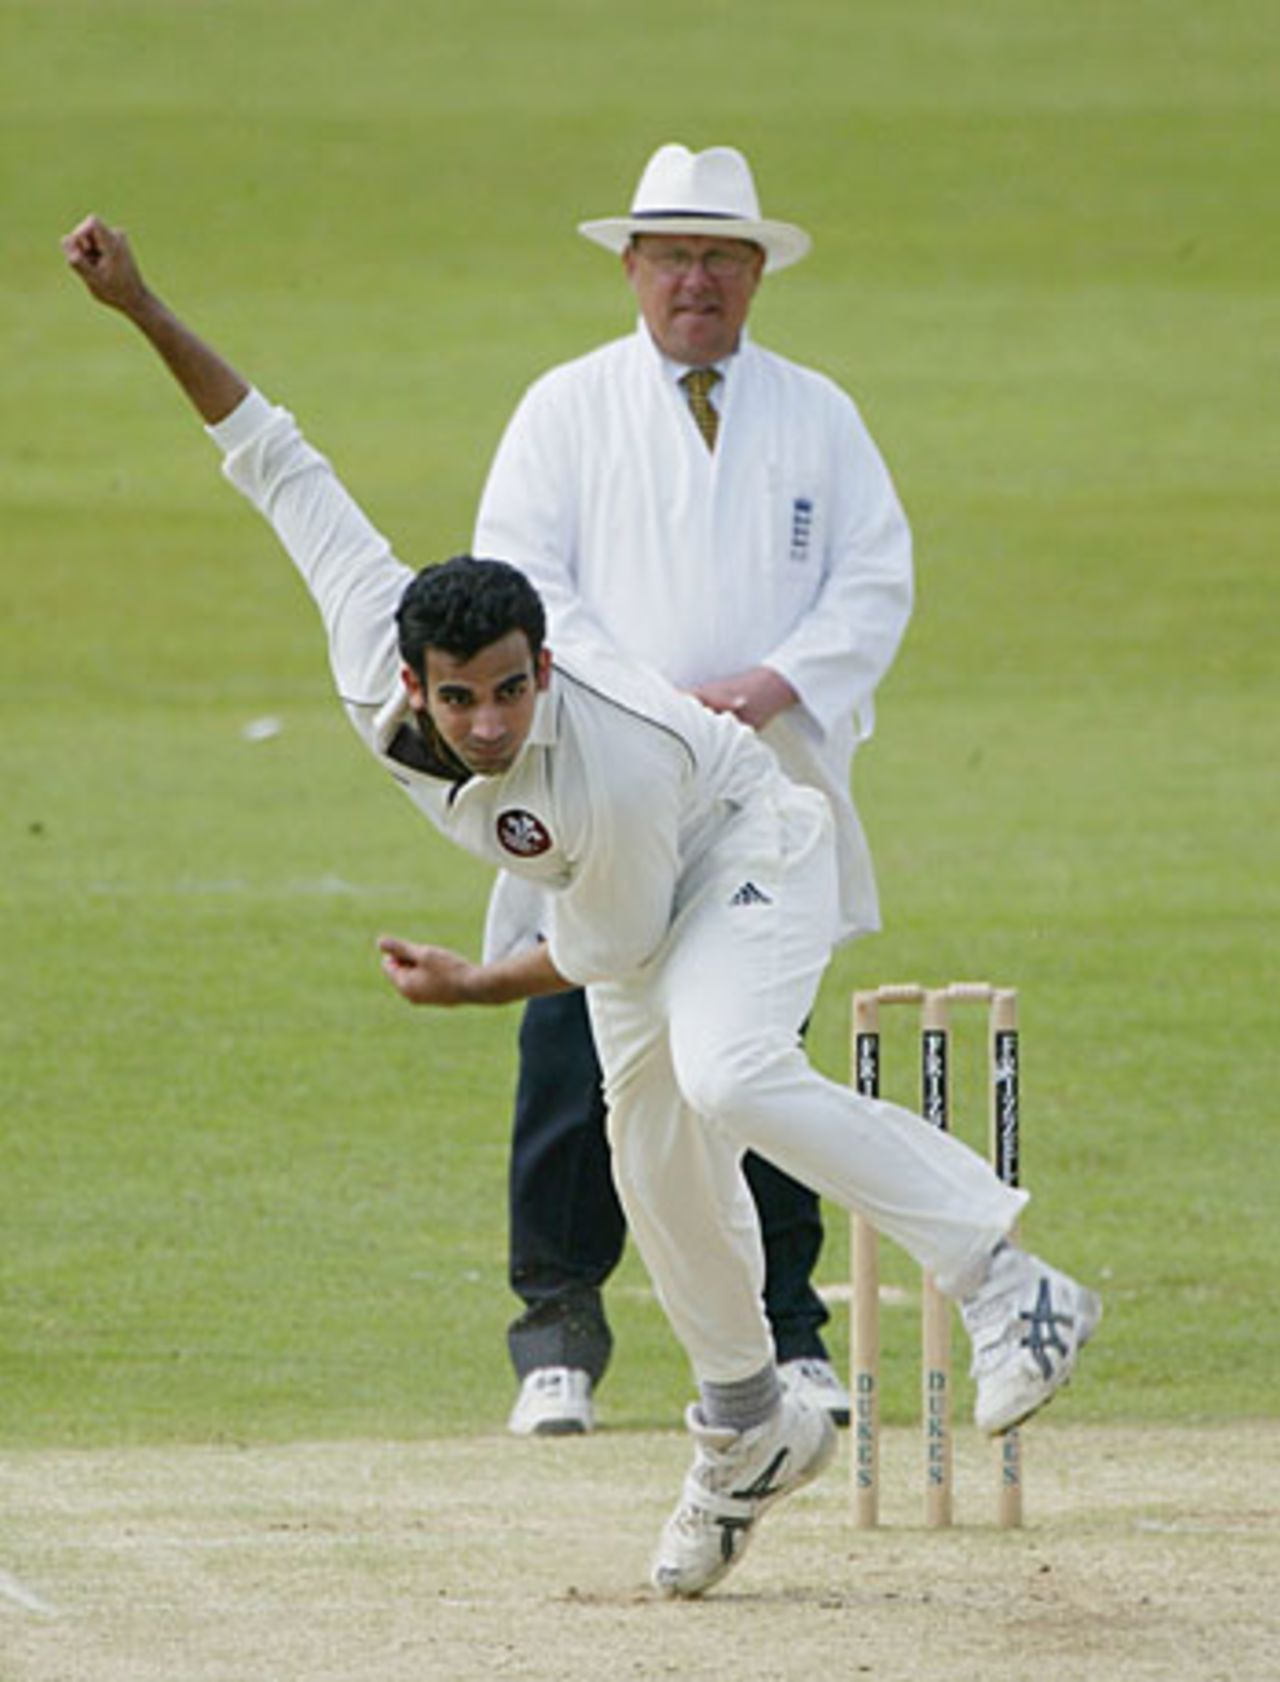 Zaheer Khan bowling for Surrey, Surrey v Kent, The Oval, May 26, 2004